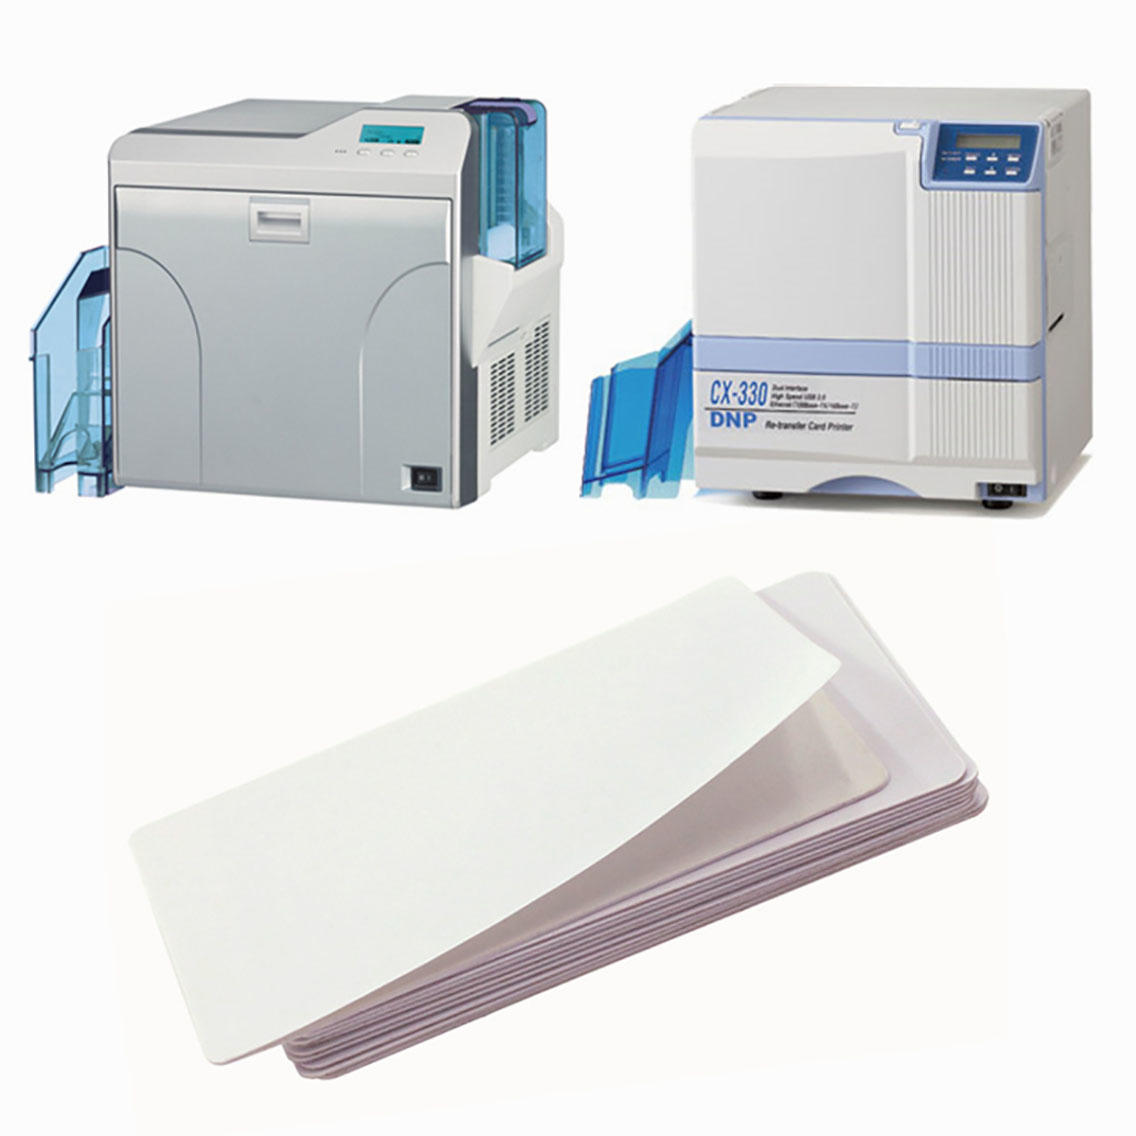 Cleanmo durable Dai Nippon Printer Cleaning Kits supplier for DNP CX-210, CX-320 & CX-330 Printers-2